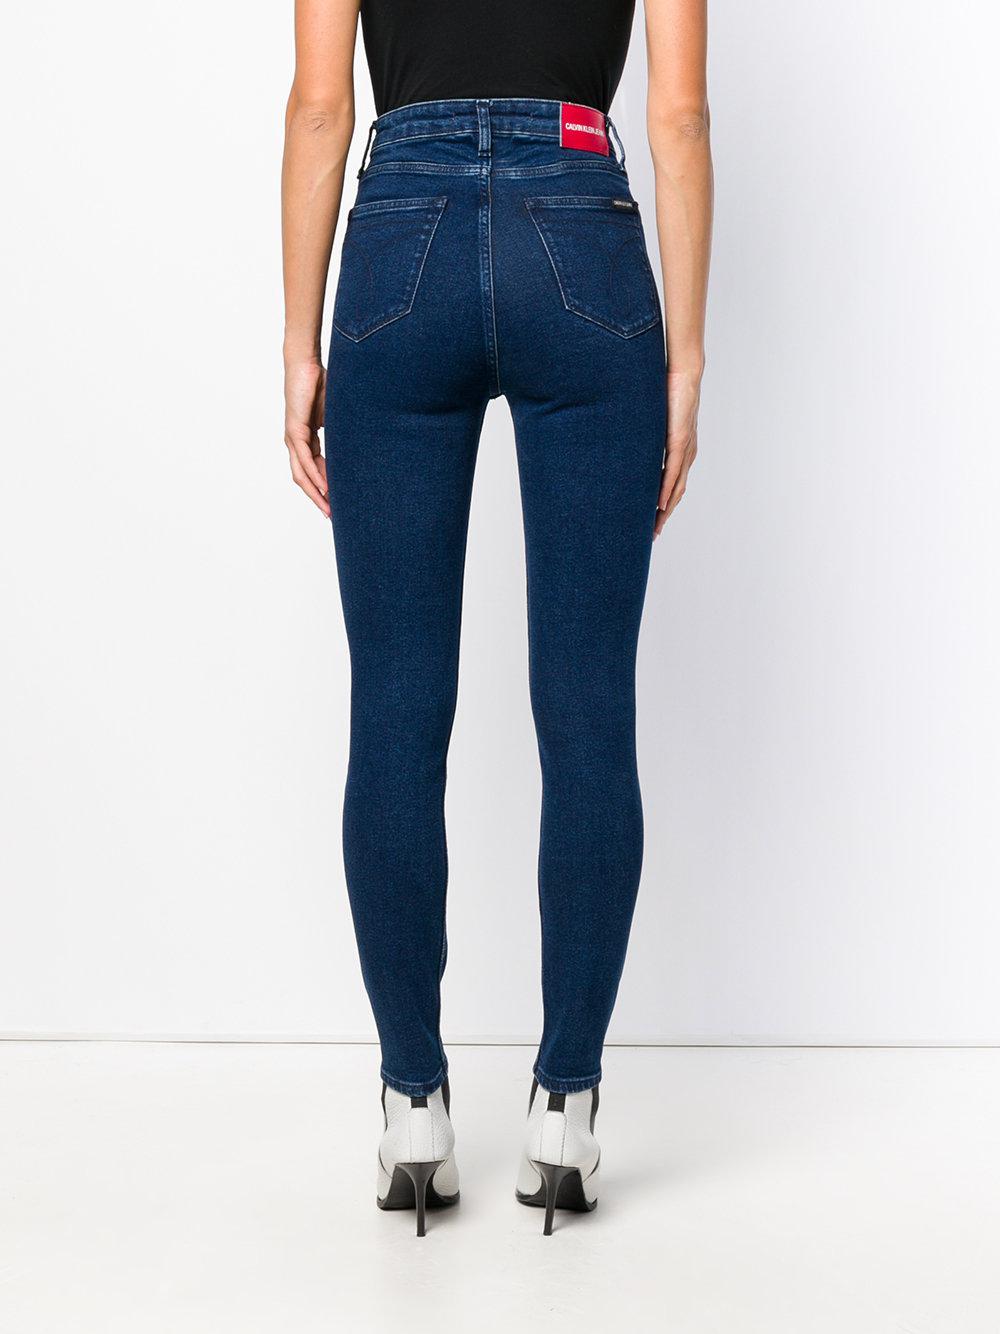 Calvin Klein Denim Ckj 010 High-rise Skinny Jeans in Blue - Lyst